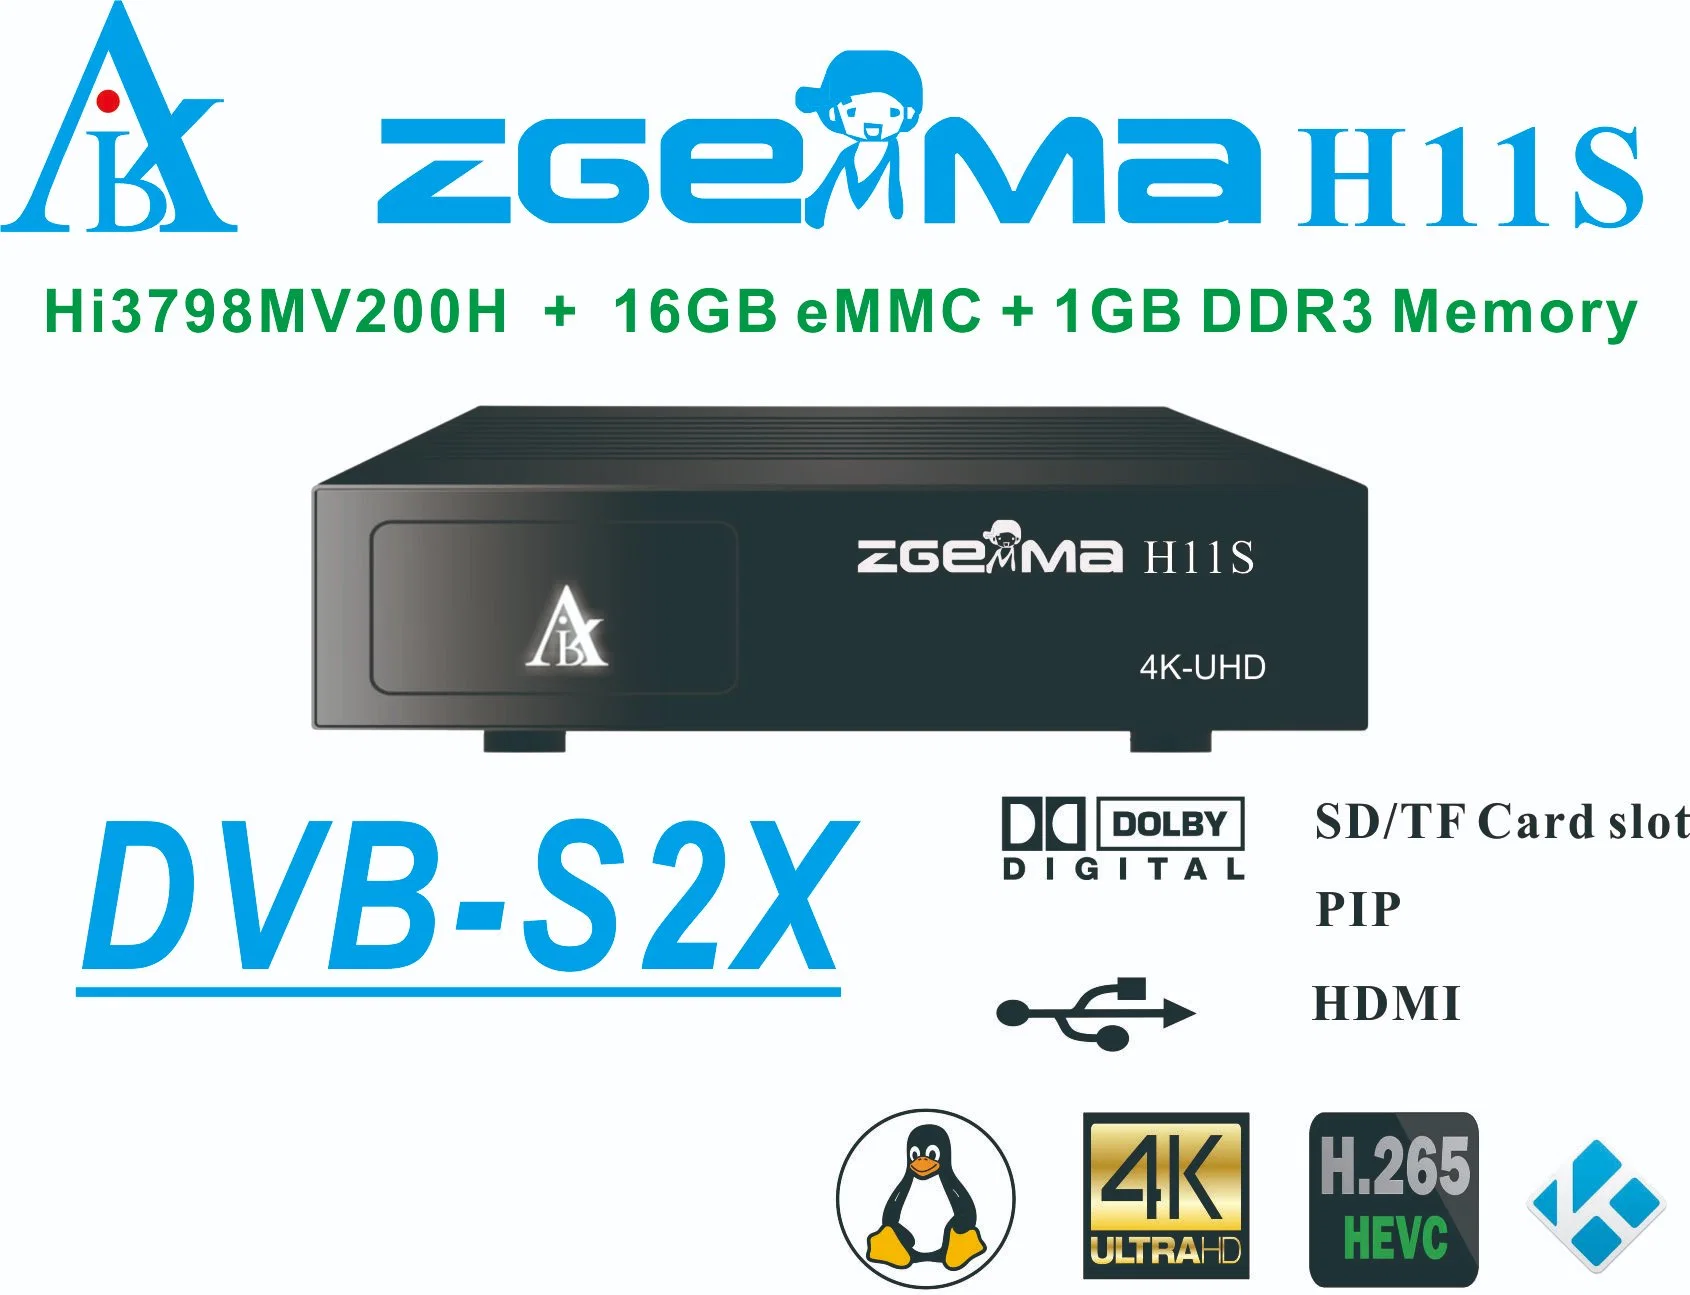 Zgemmah11s 4K- 2160p sistema operativo Linux receptor de TV por satélite digital